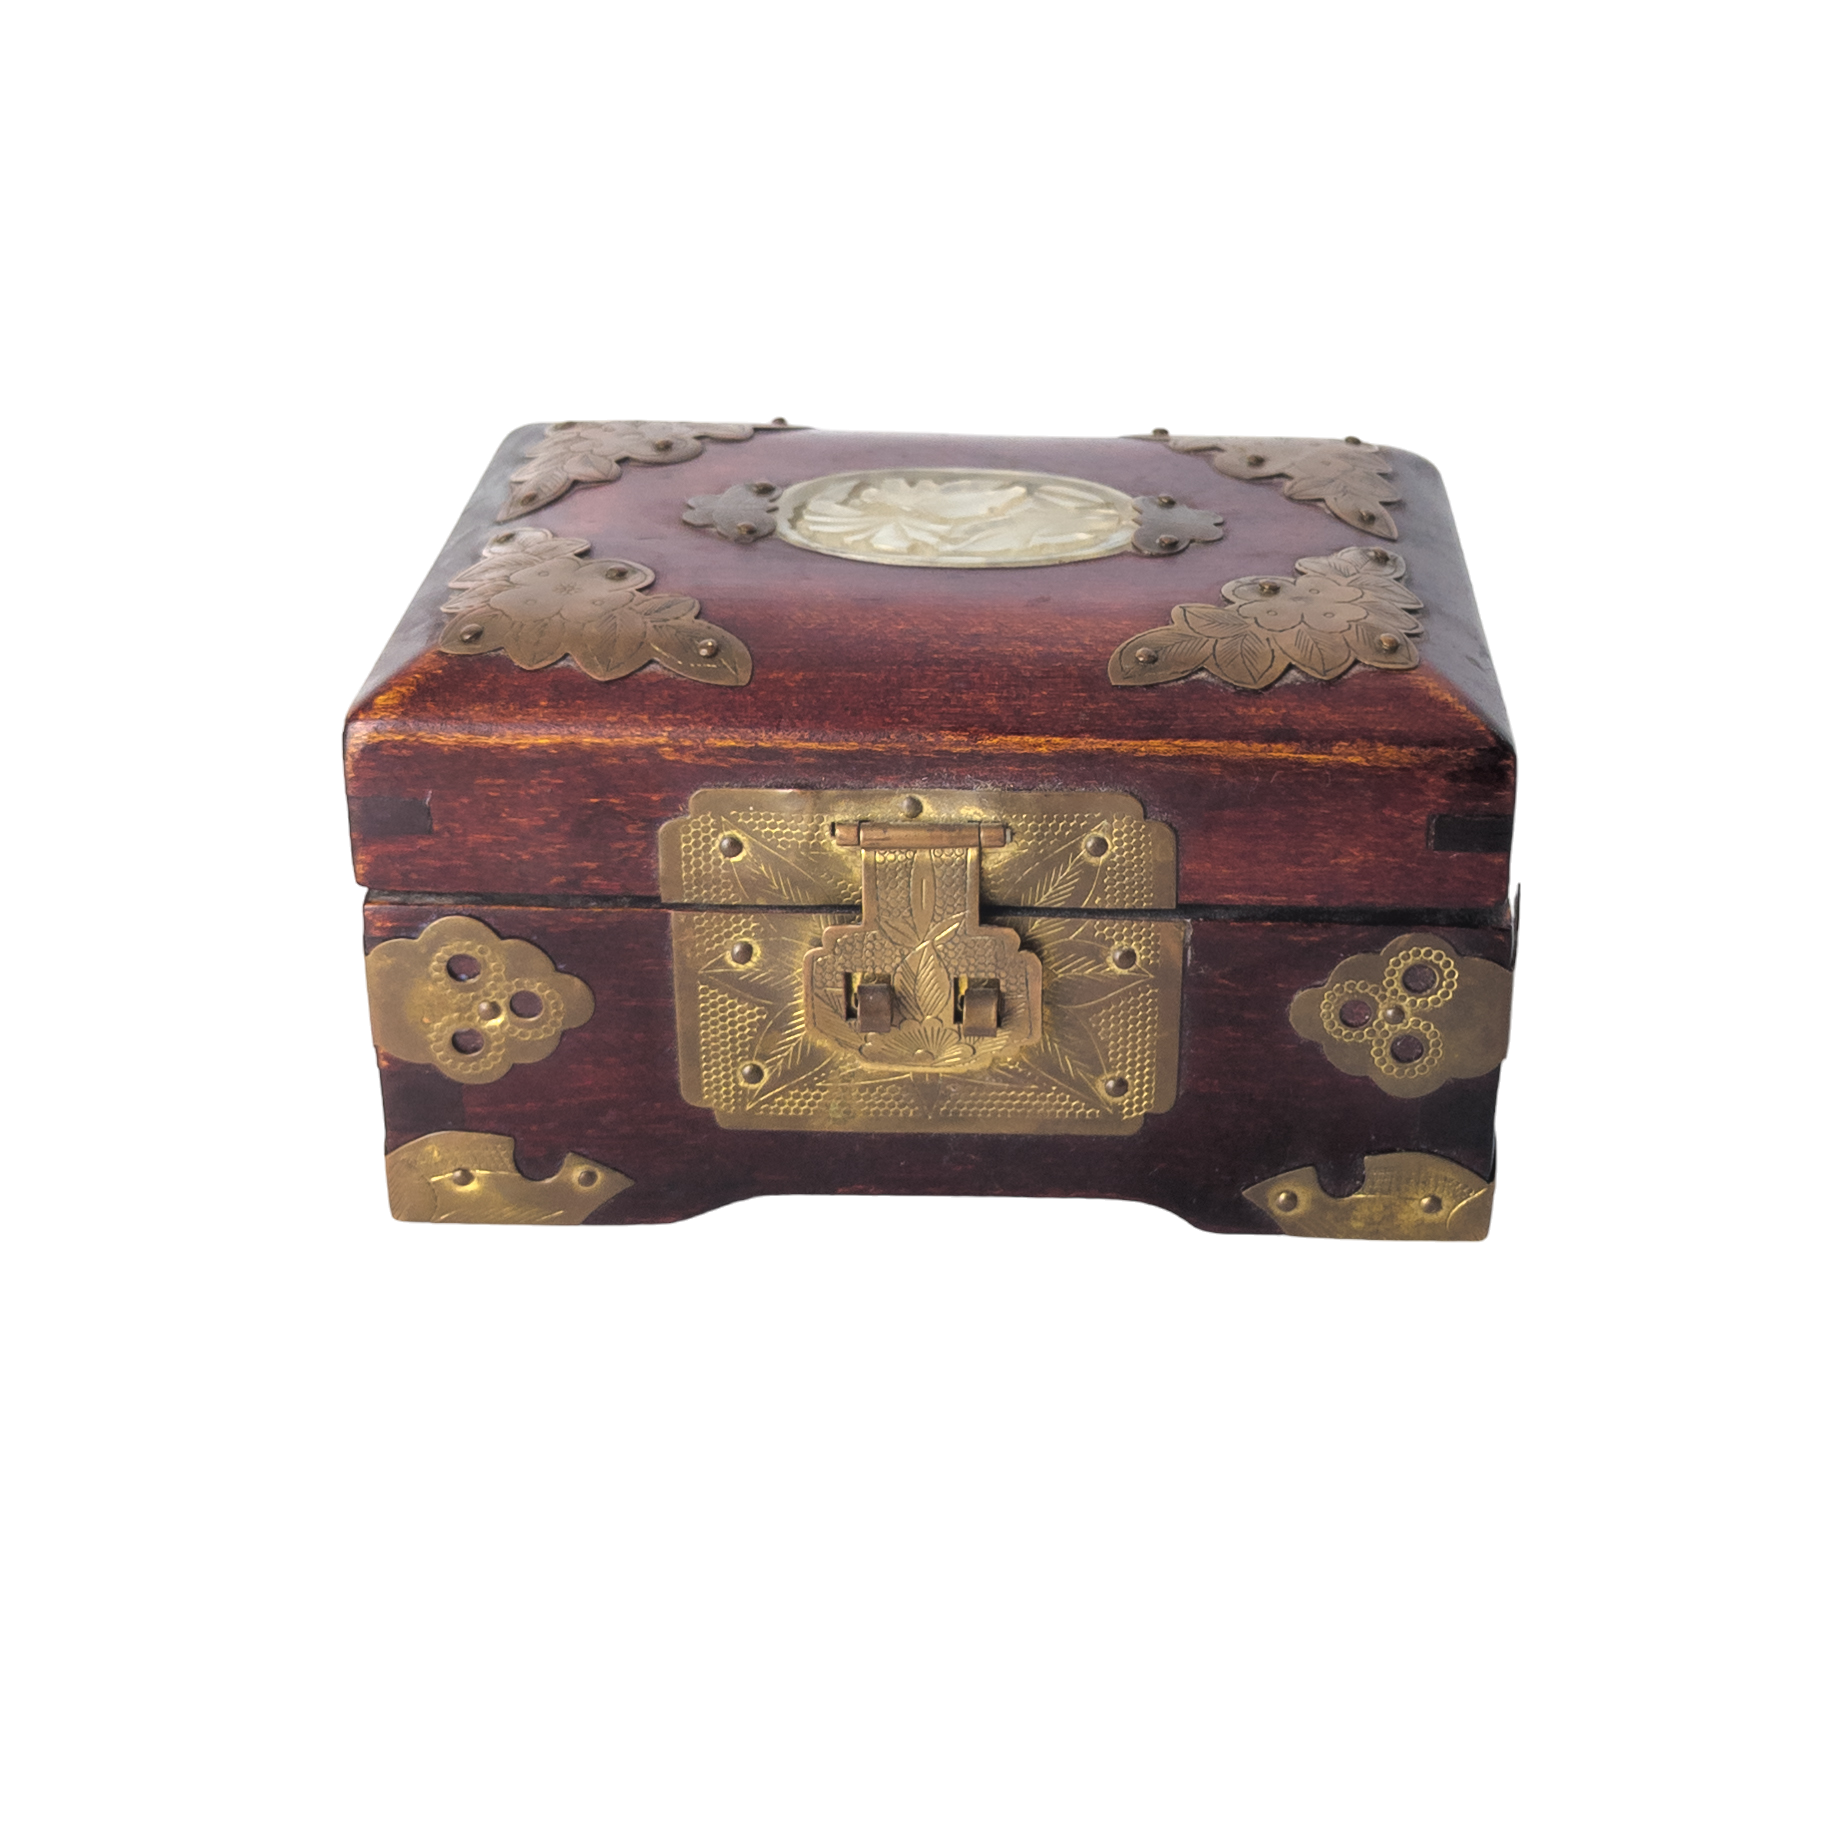 Vintage Chinese Jade Inlaid Jewelry Box